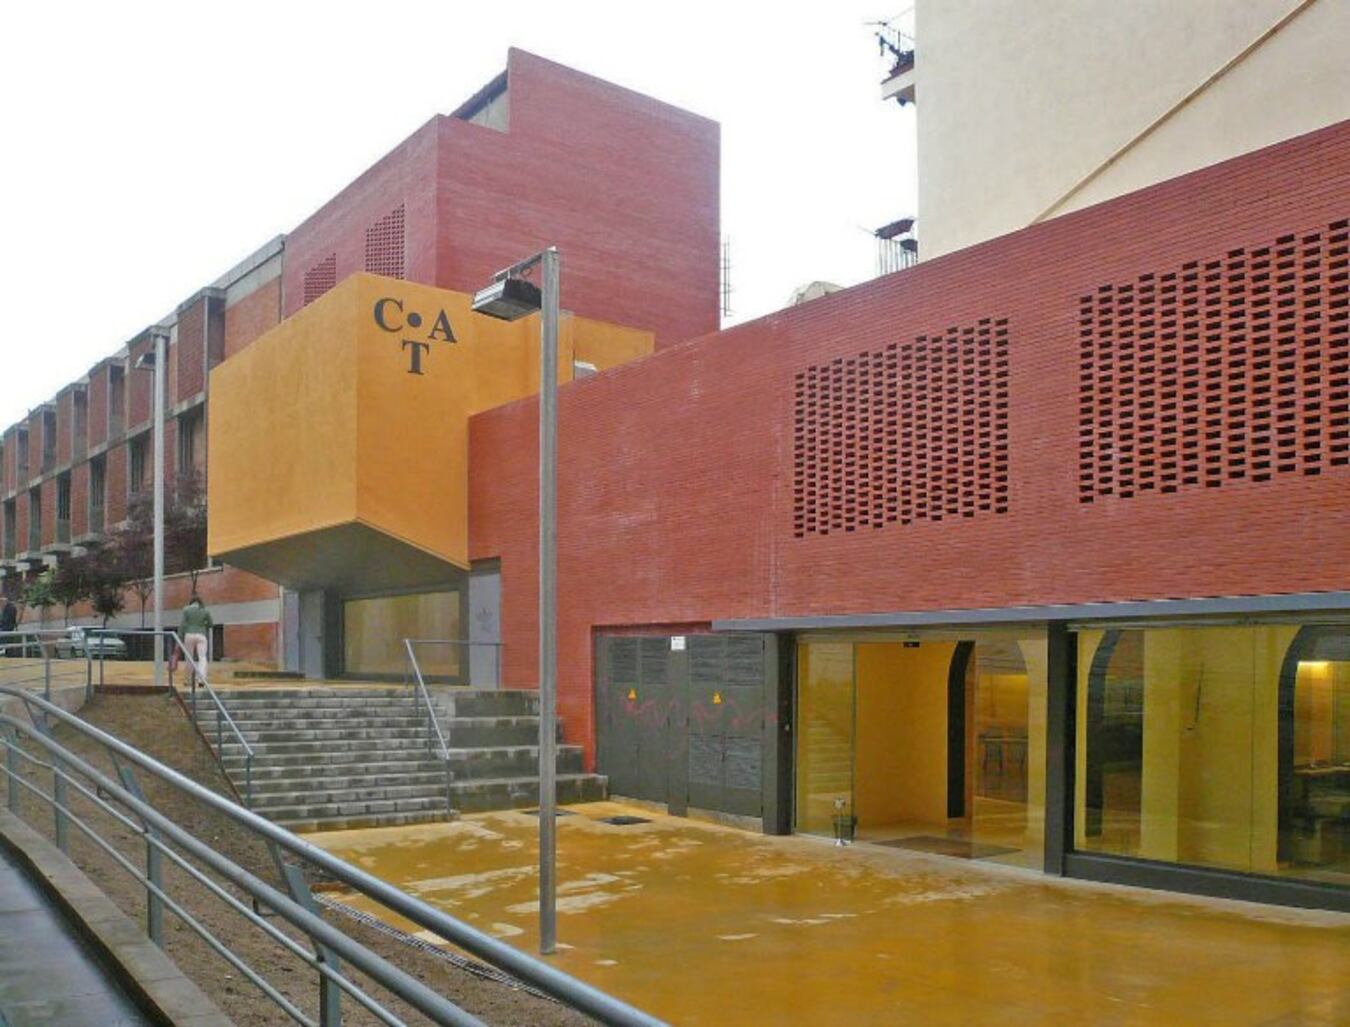 Centre Artesà Tradicionàrius